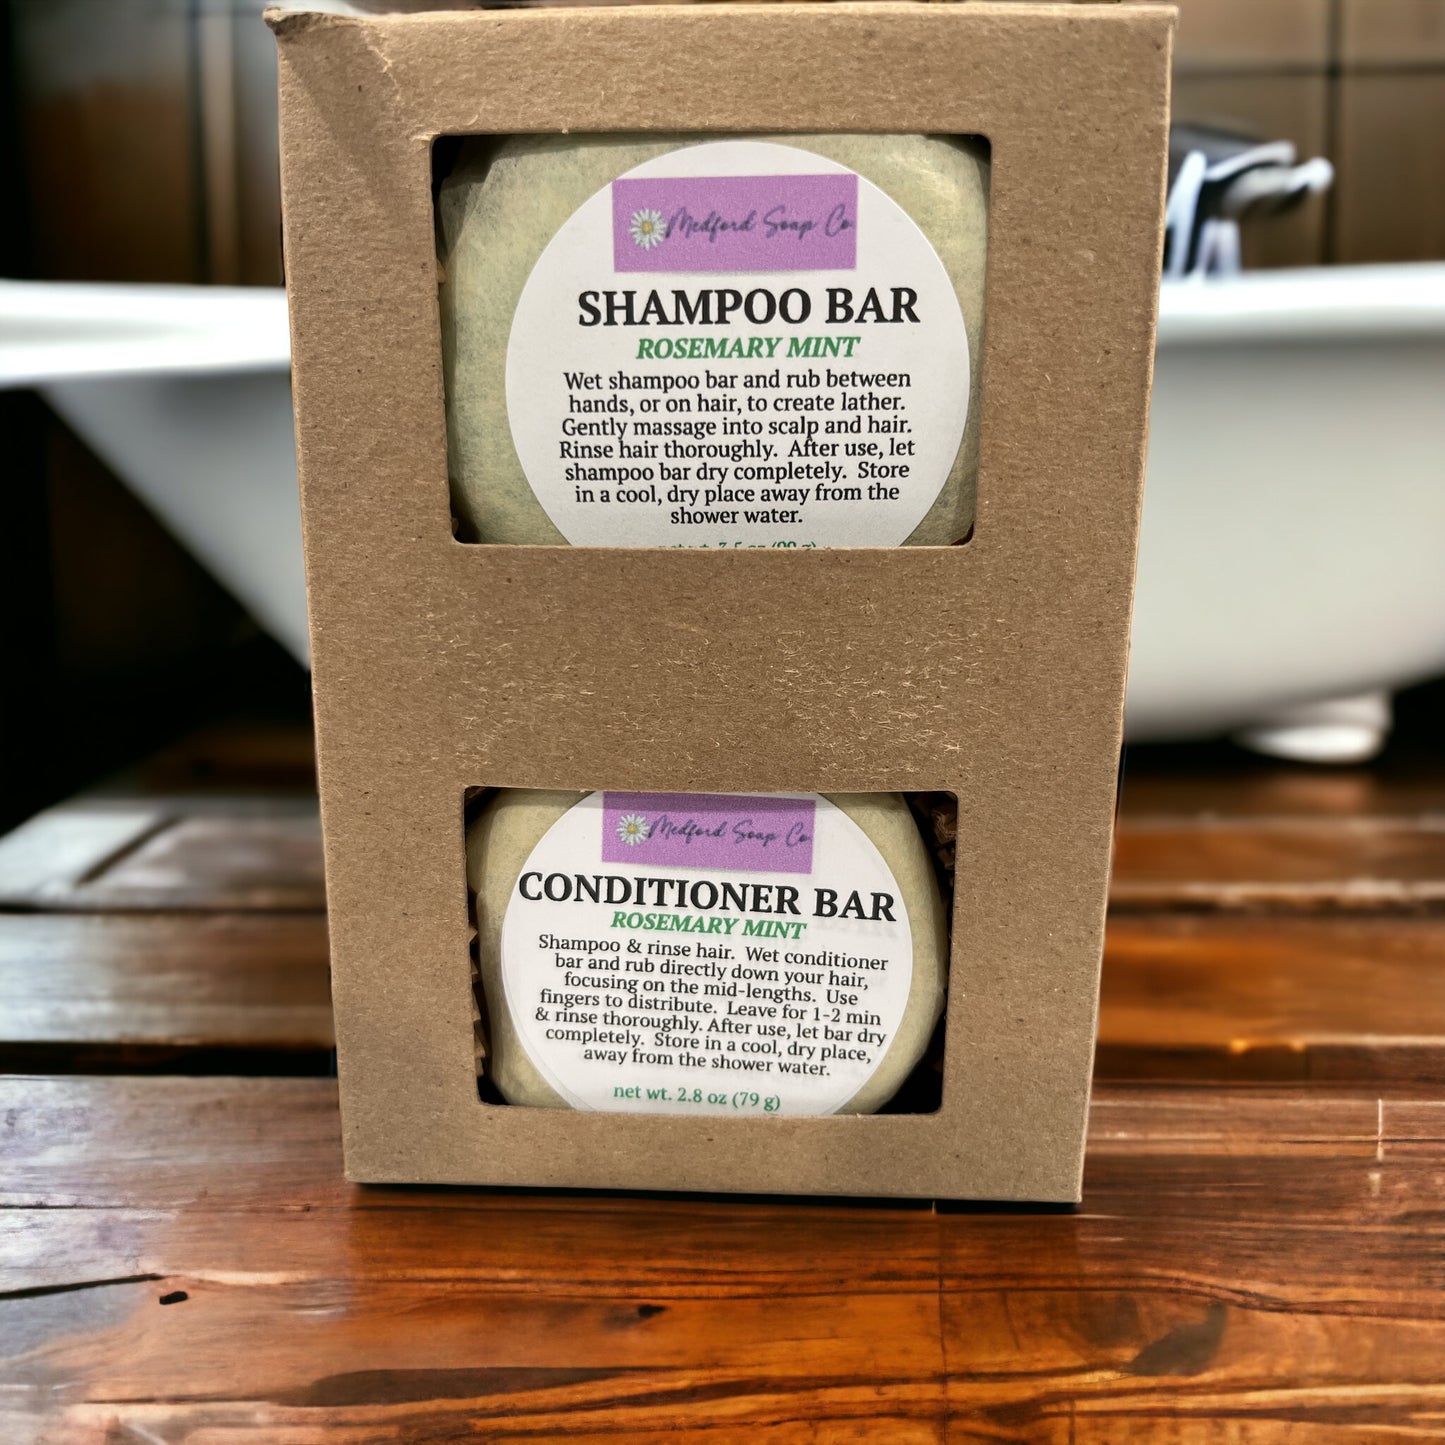 Shampoo & Conditioner Sets